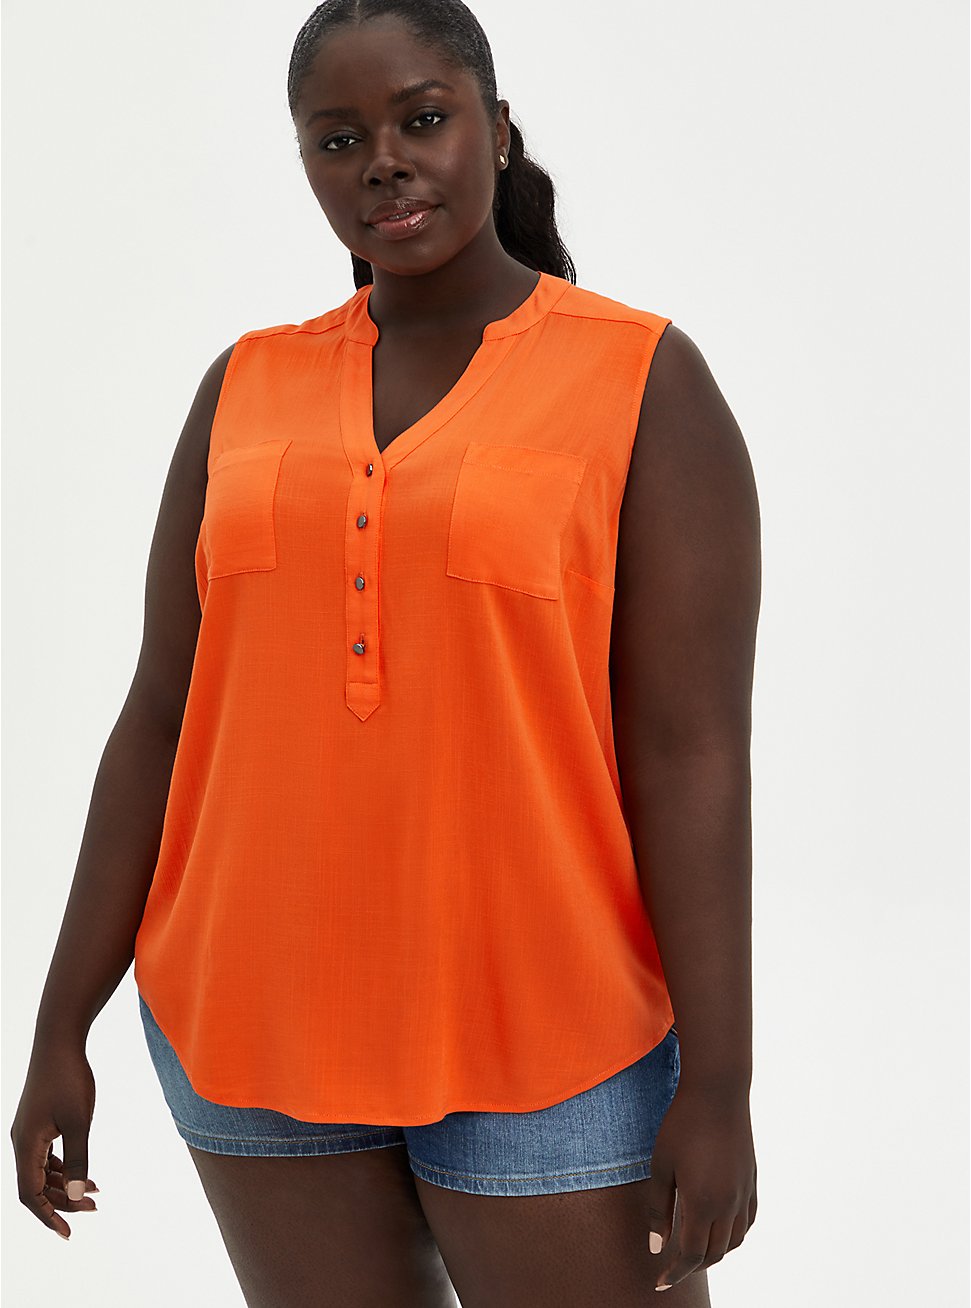 discount 87% Bluton jumper WOMEN FASHION Jumpers & Sweatshirts Jumper Casual Orange 42                  EU 